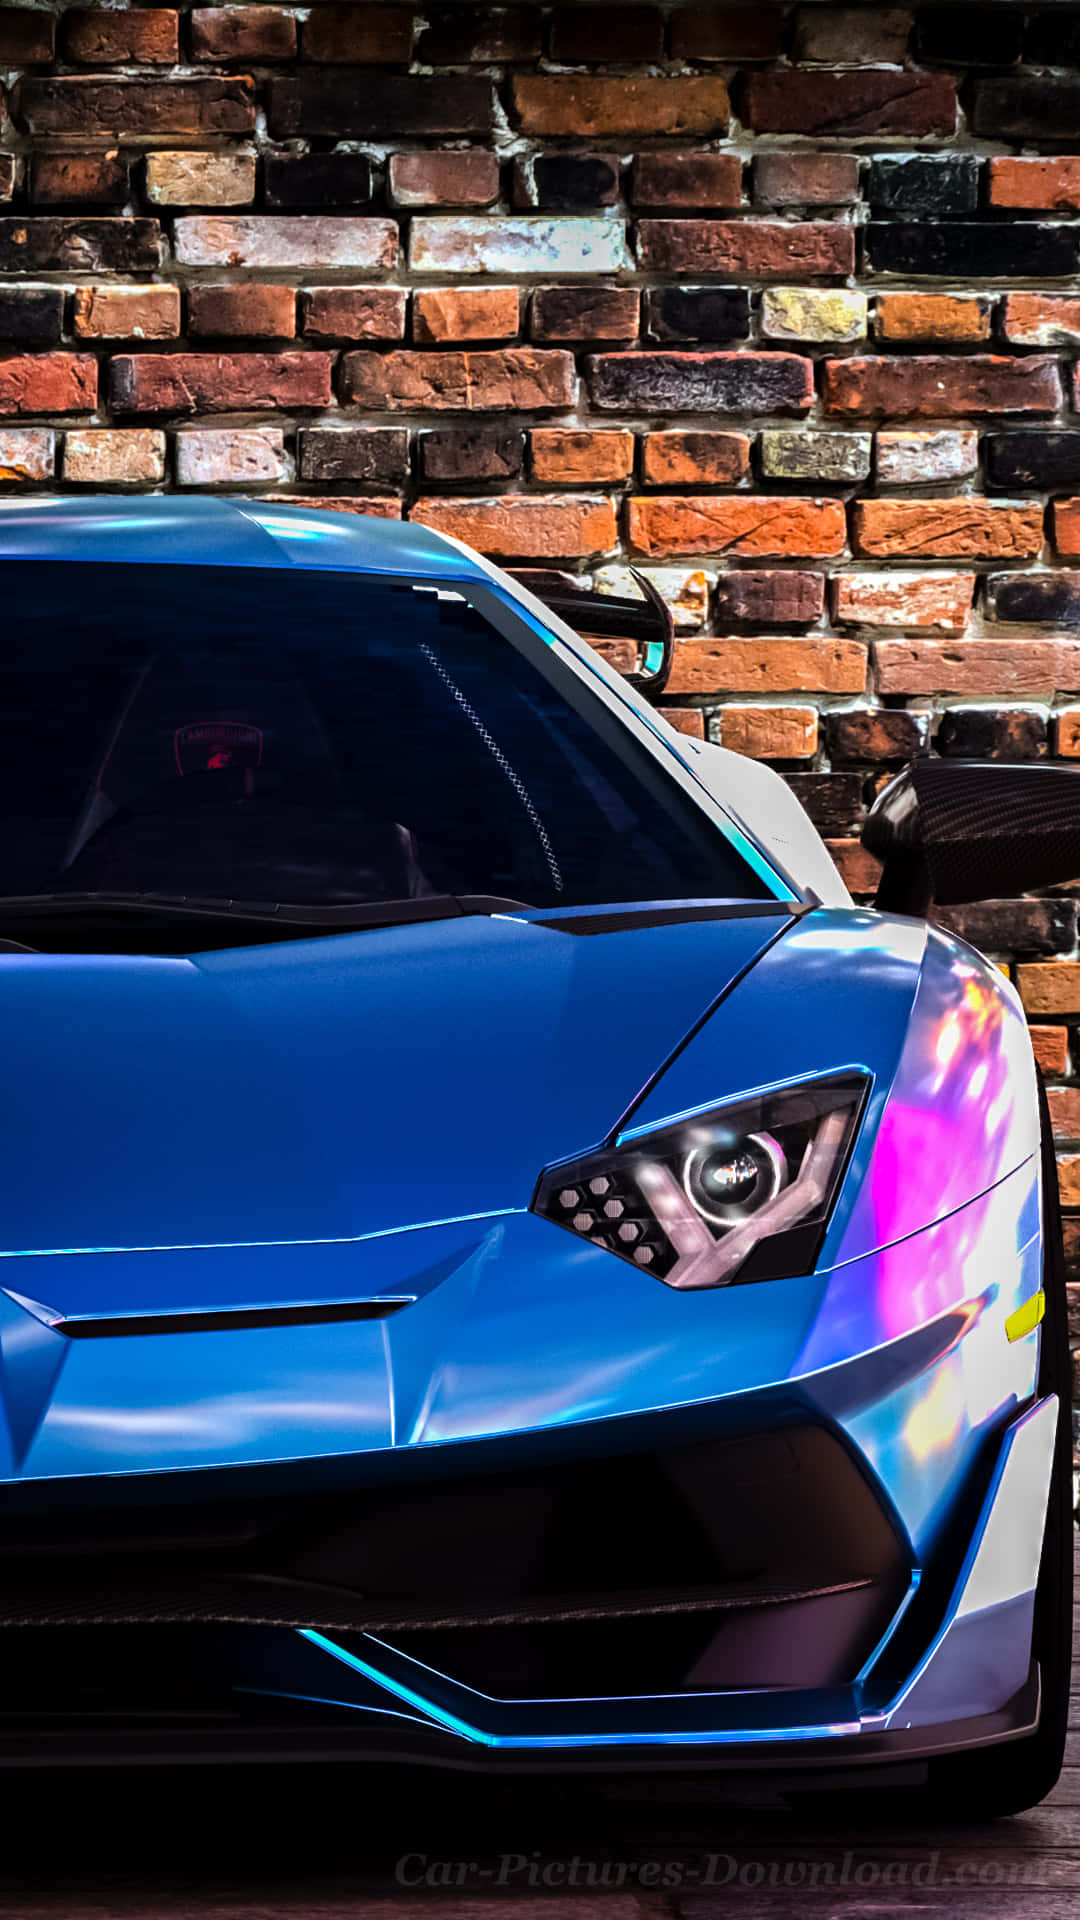 Få udseendet - nyd den luksuriøse blå Lamborghini tapet Wallpaper